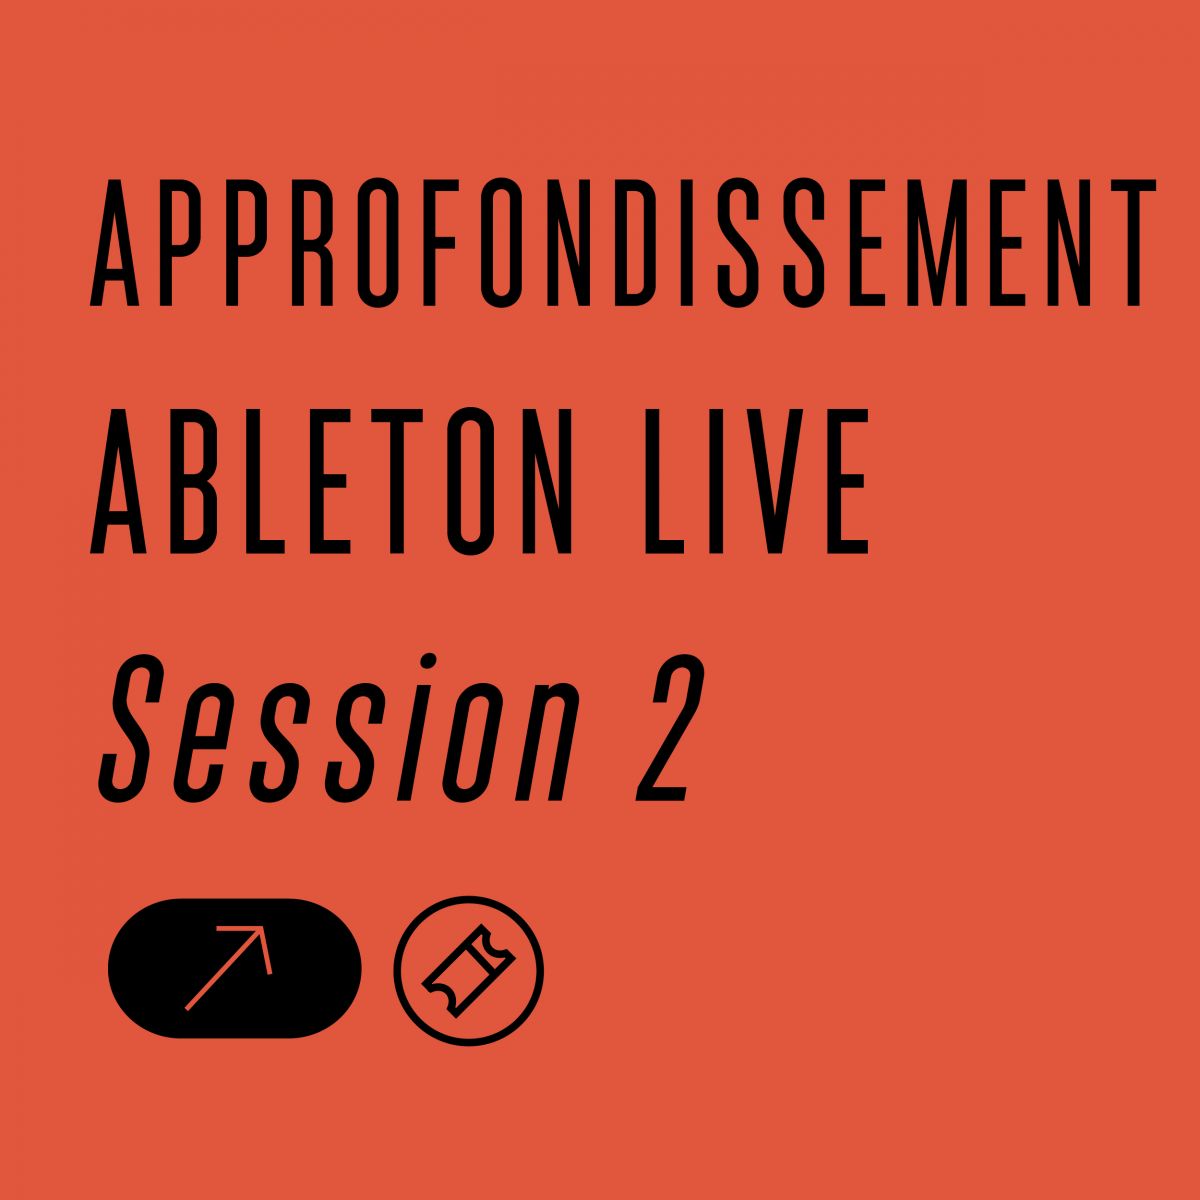 [COMPLET] [Atelier] - APPROFONDISSEMENT ABLETON LIVE - Session 2